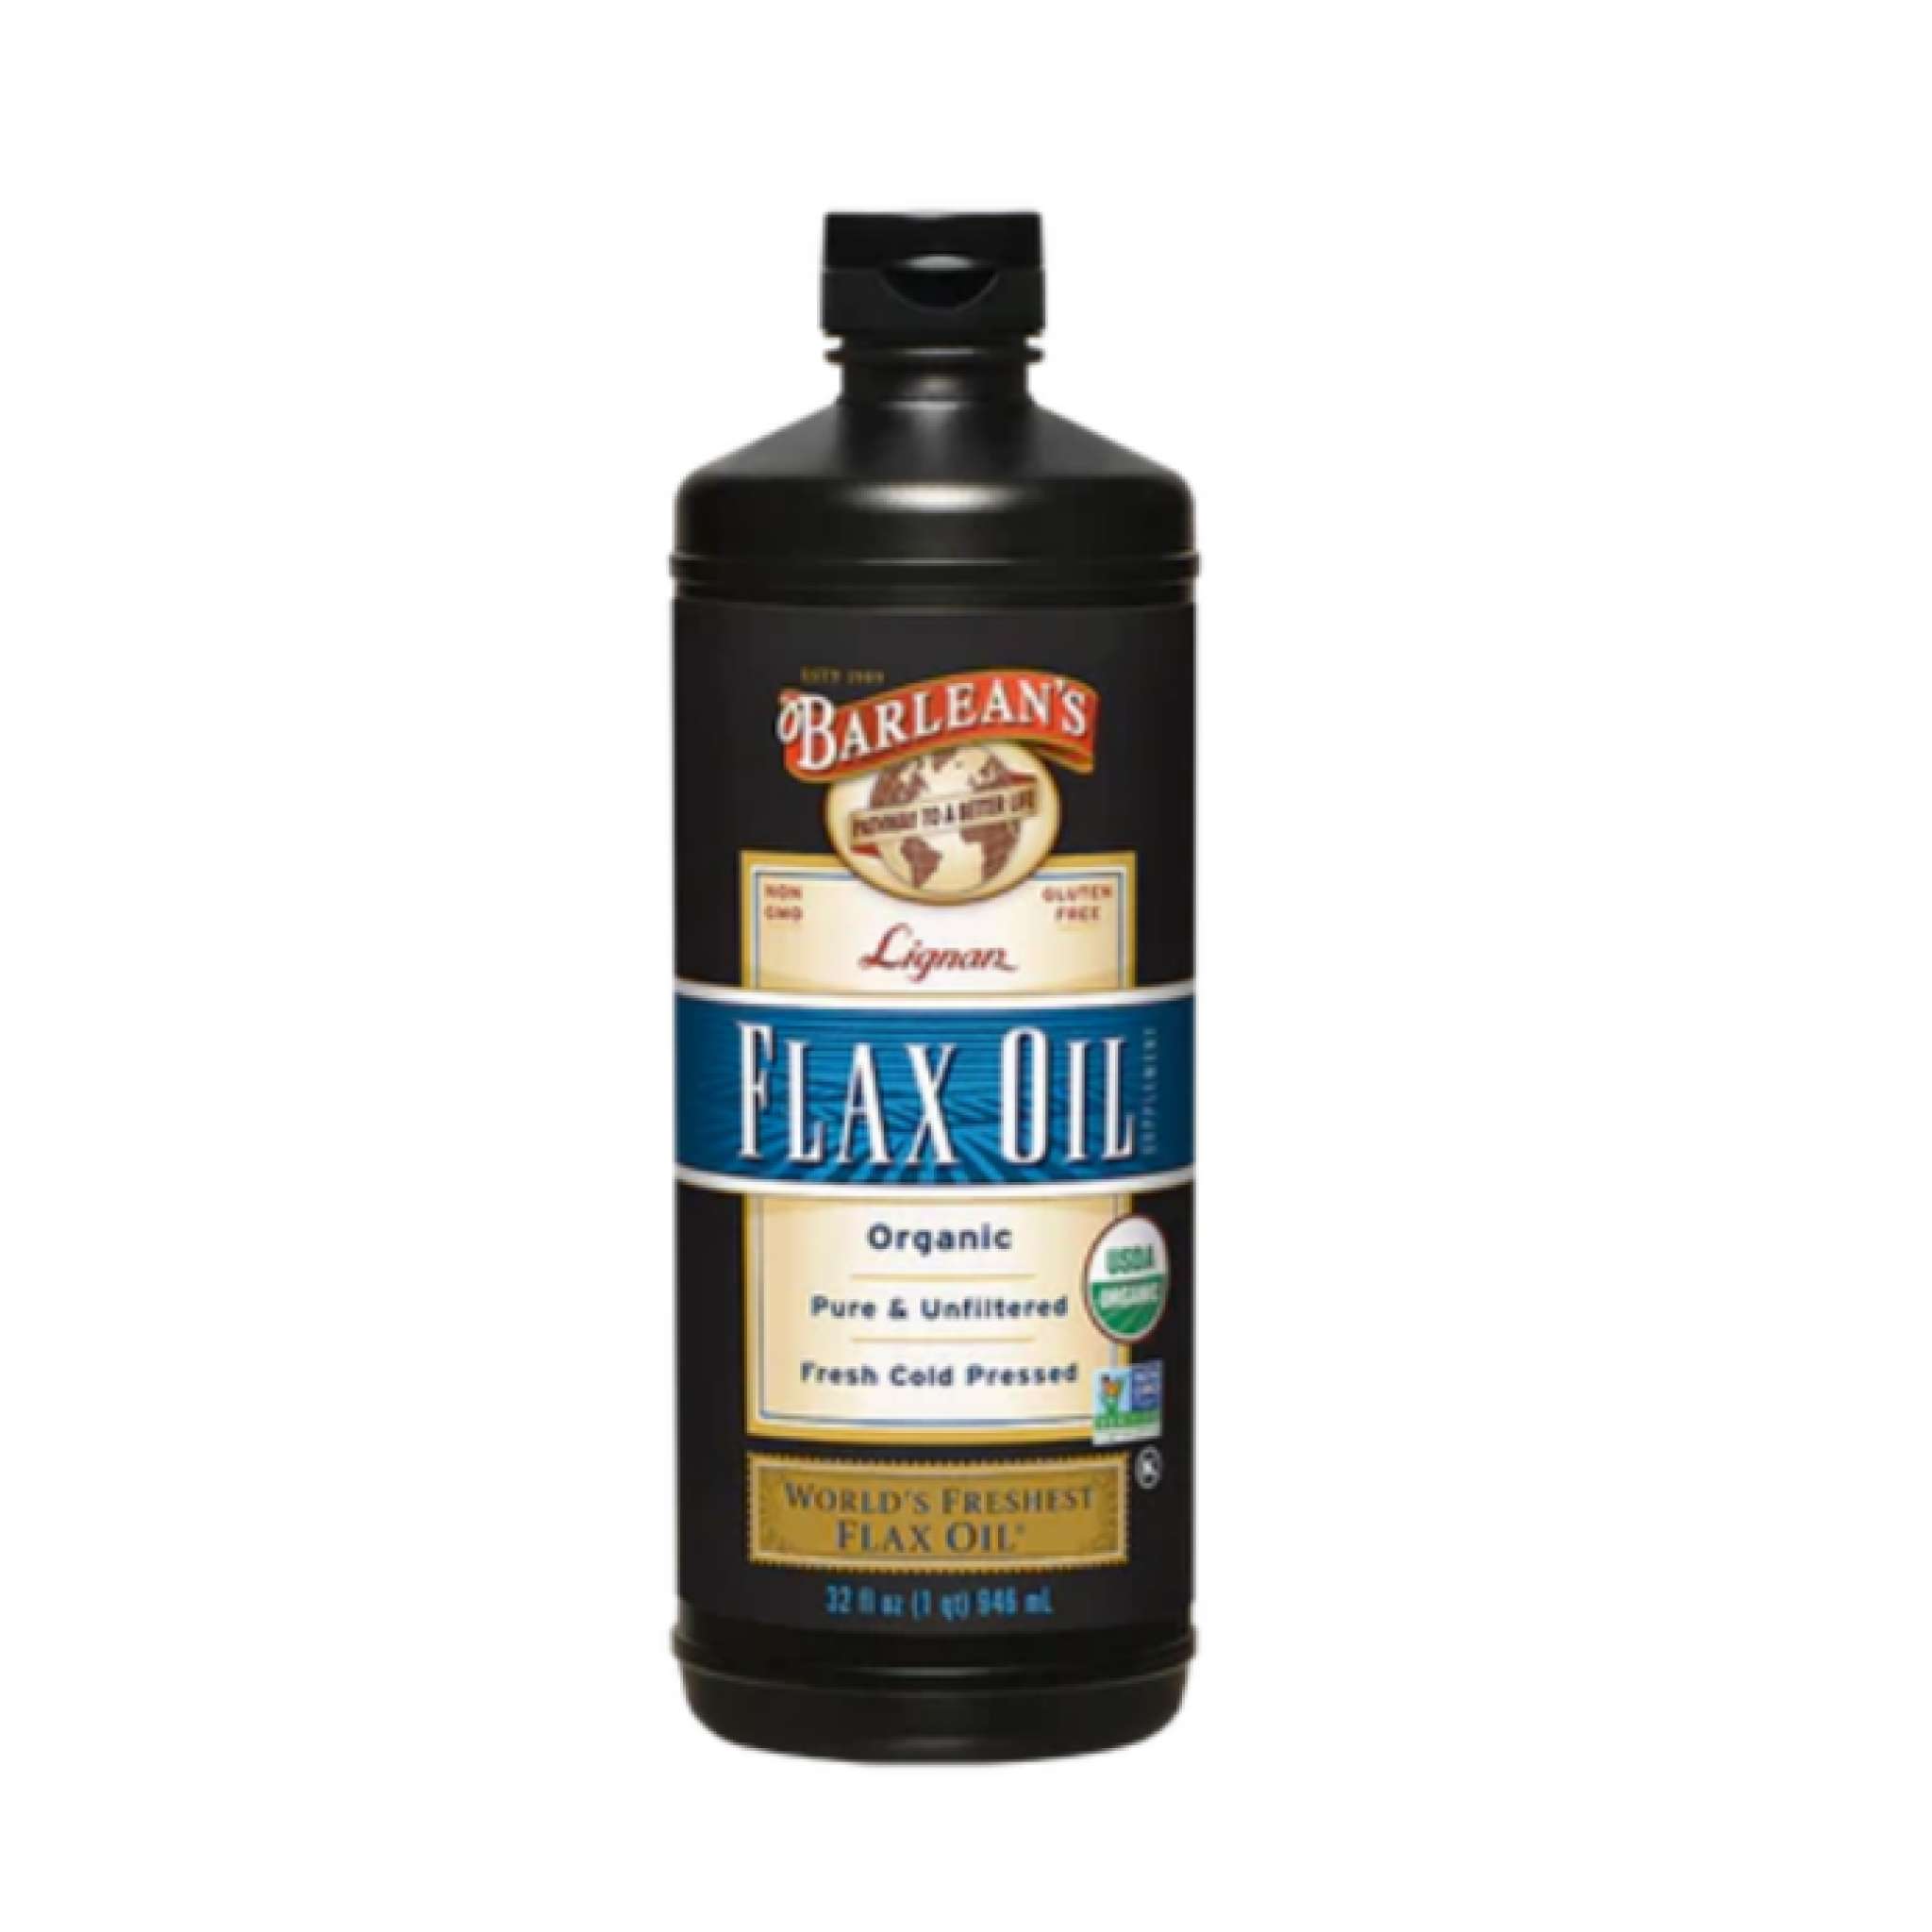 Barleans - Flaxseed Oil High Lignan